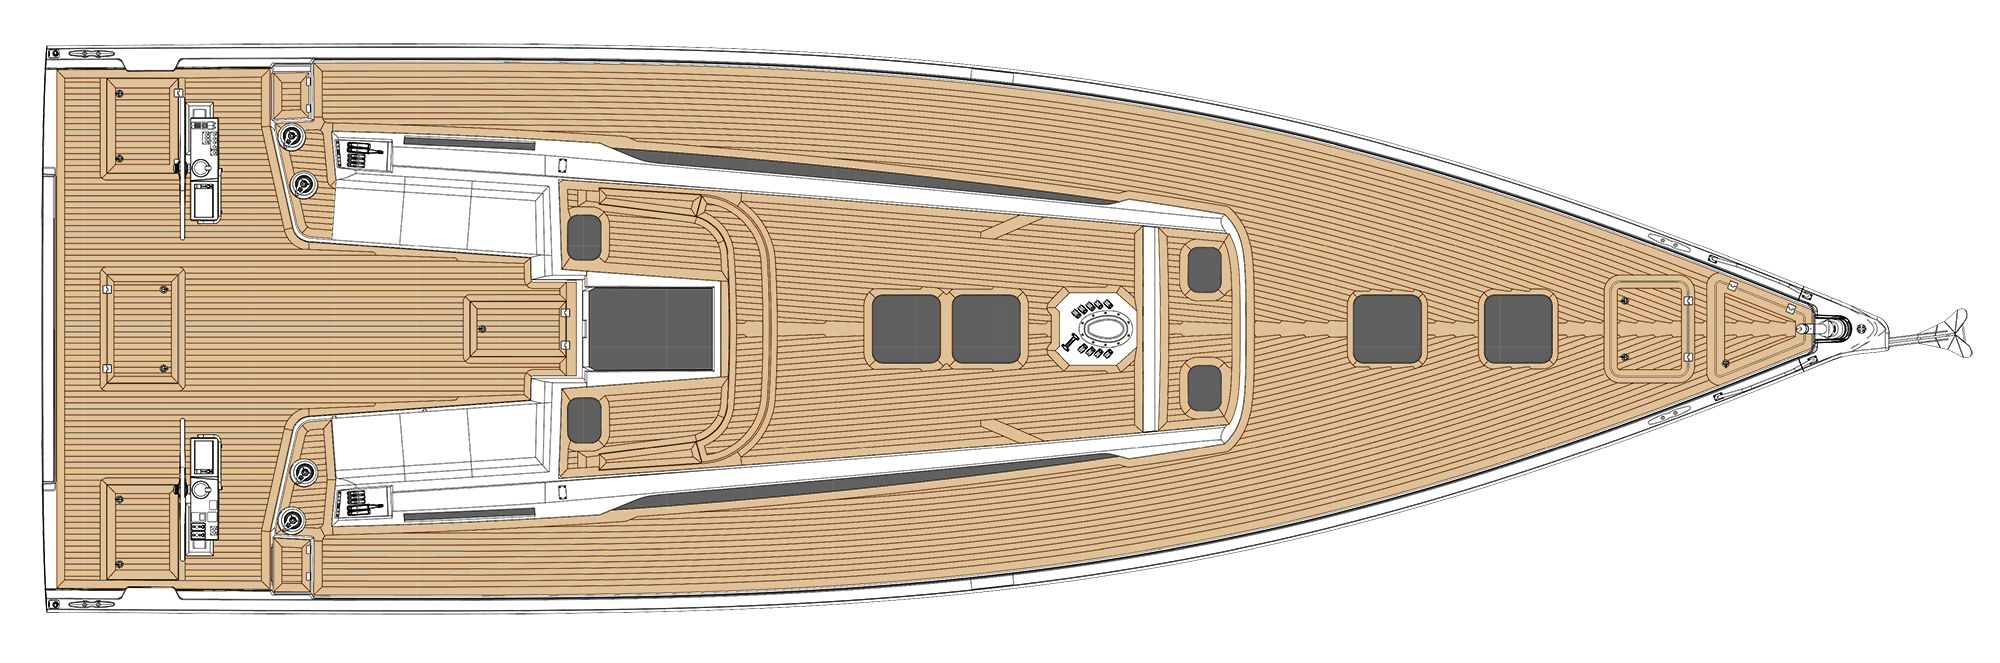 solaris 100 yacht